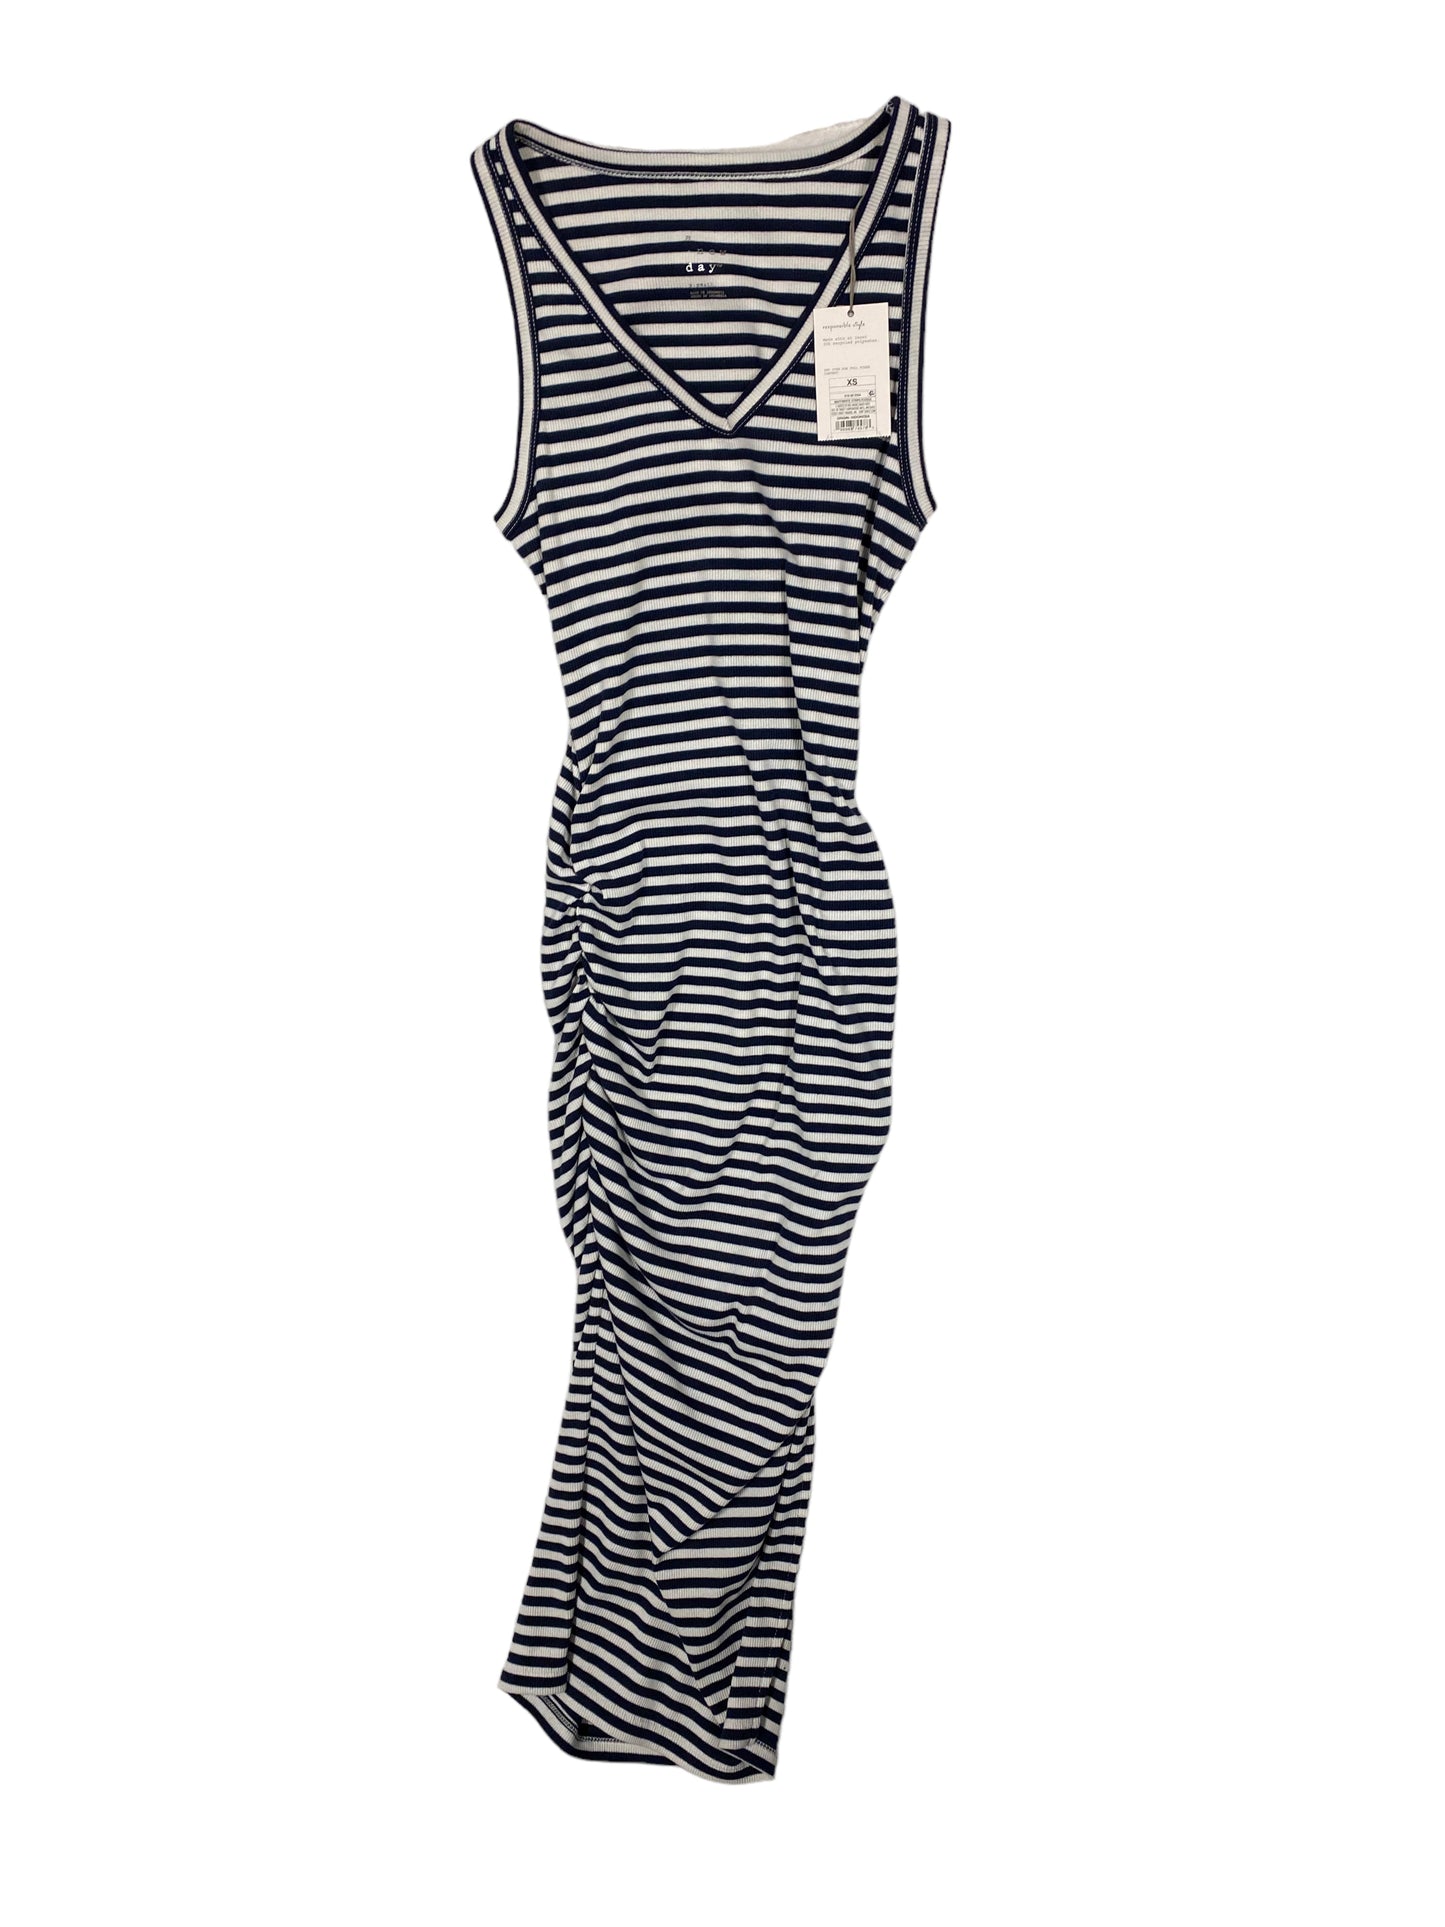 Striped Pattern Dress Casual Midi A New Day, Size Xs